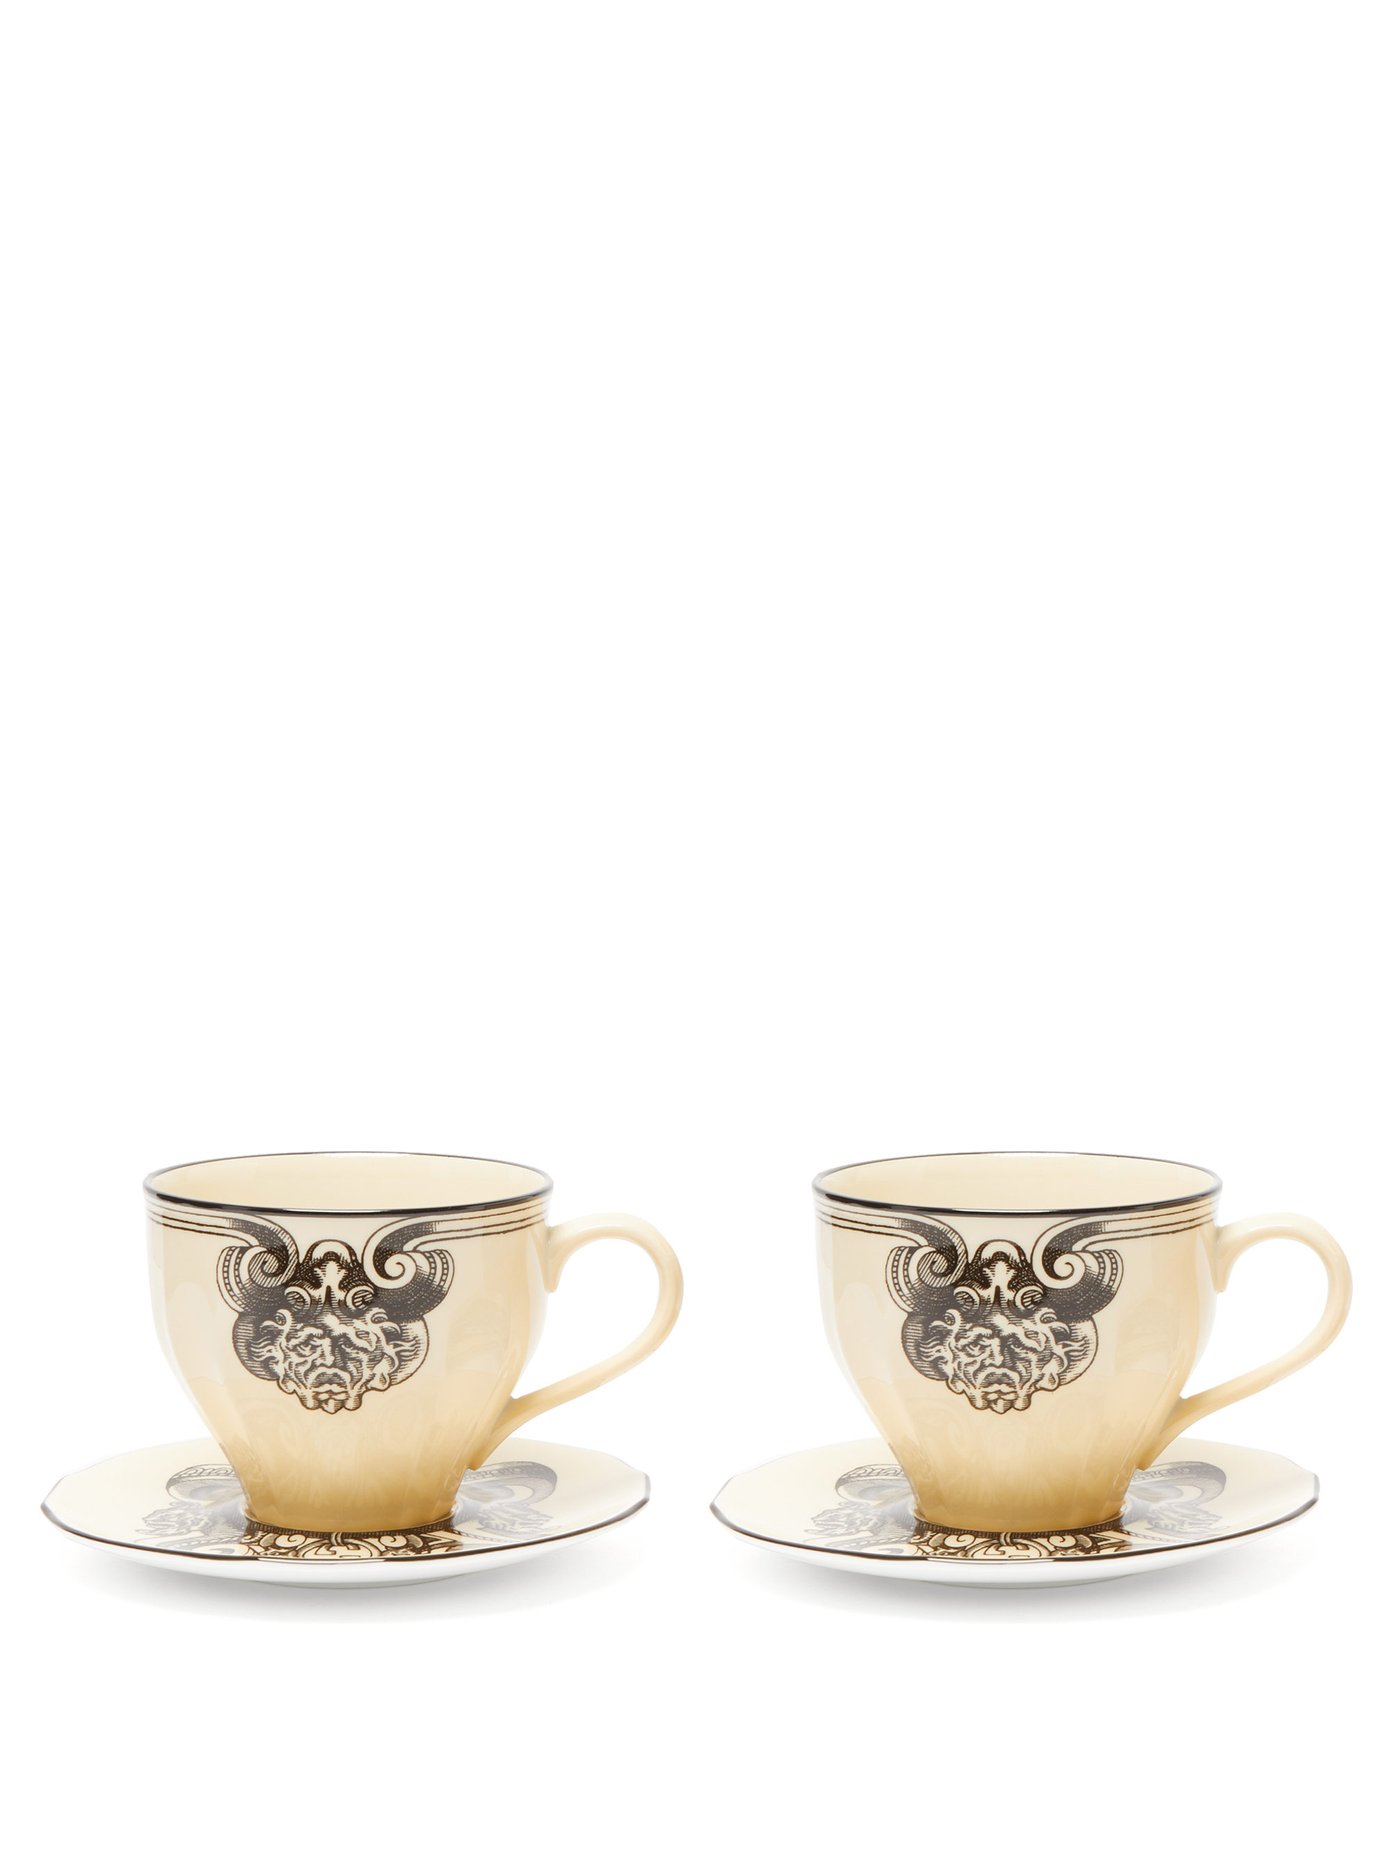 2 Richard Ginori White Cups tea/coffee/Sake